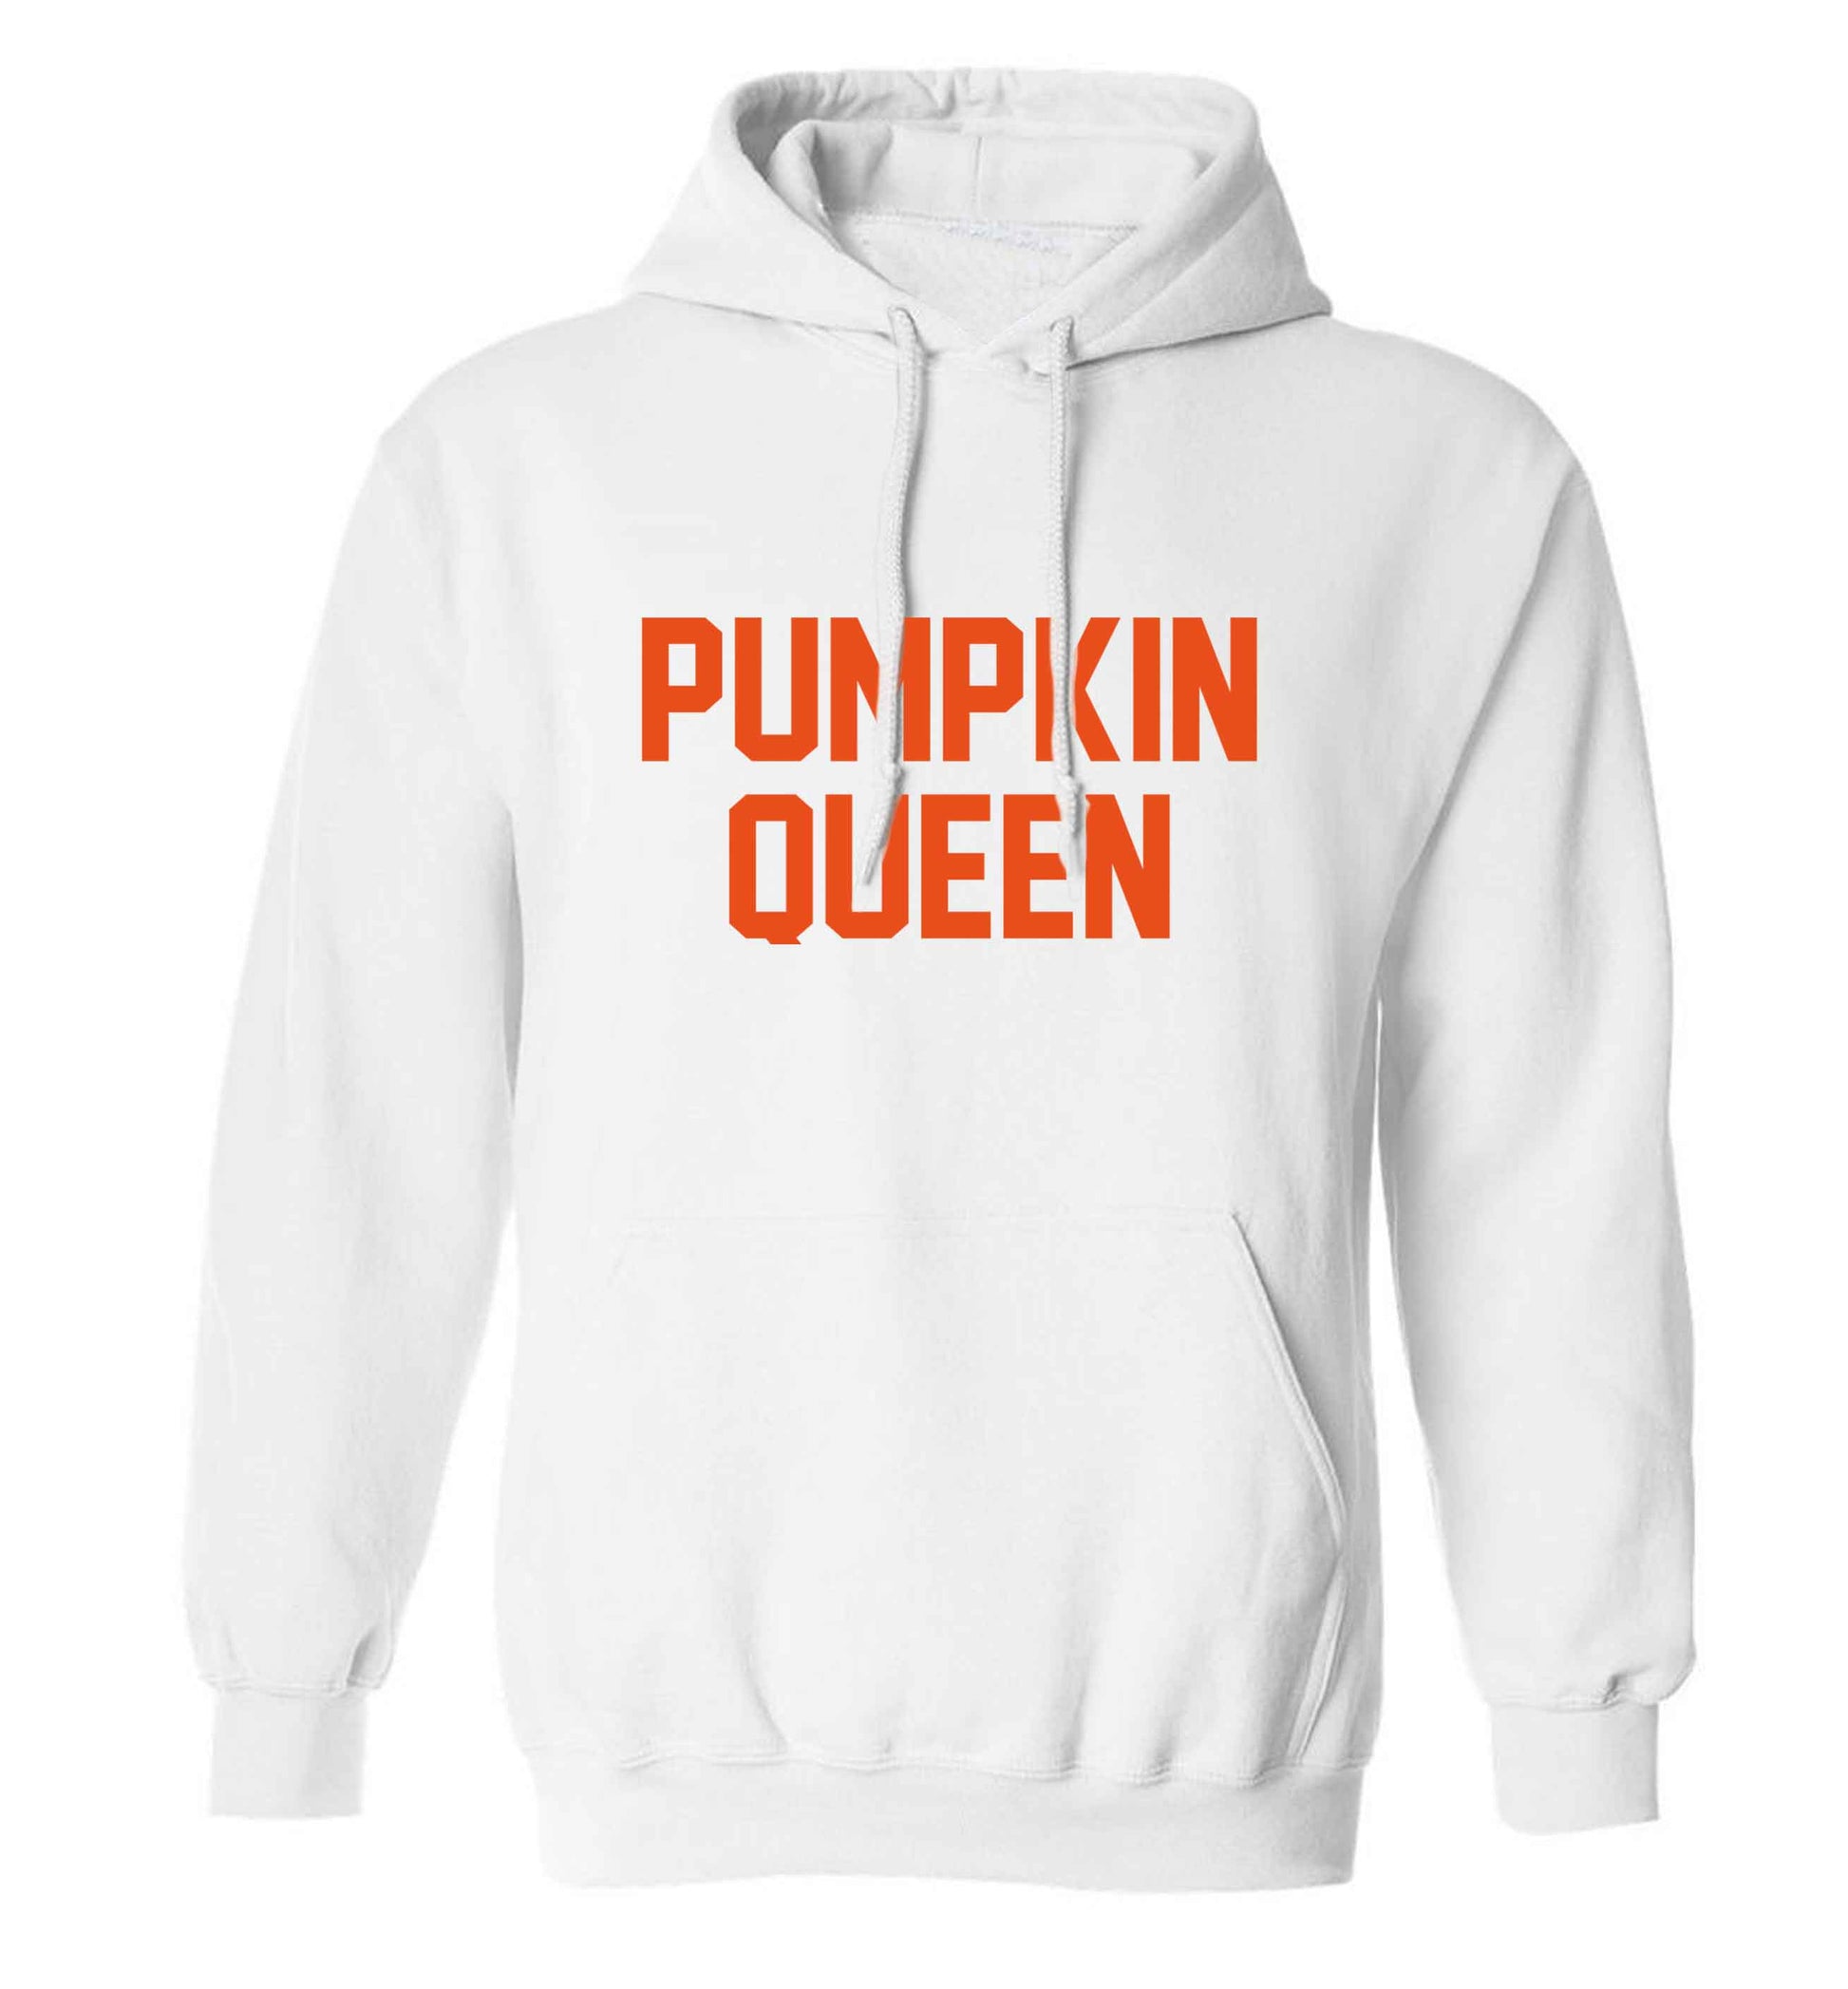 Pumpkin Queen adults unisex white hoodie 2XL